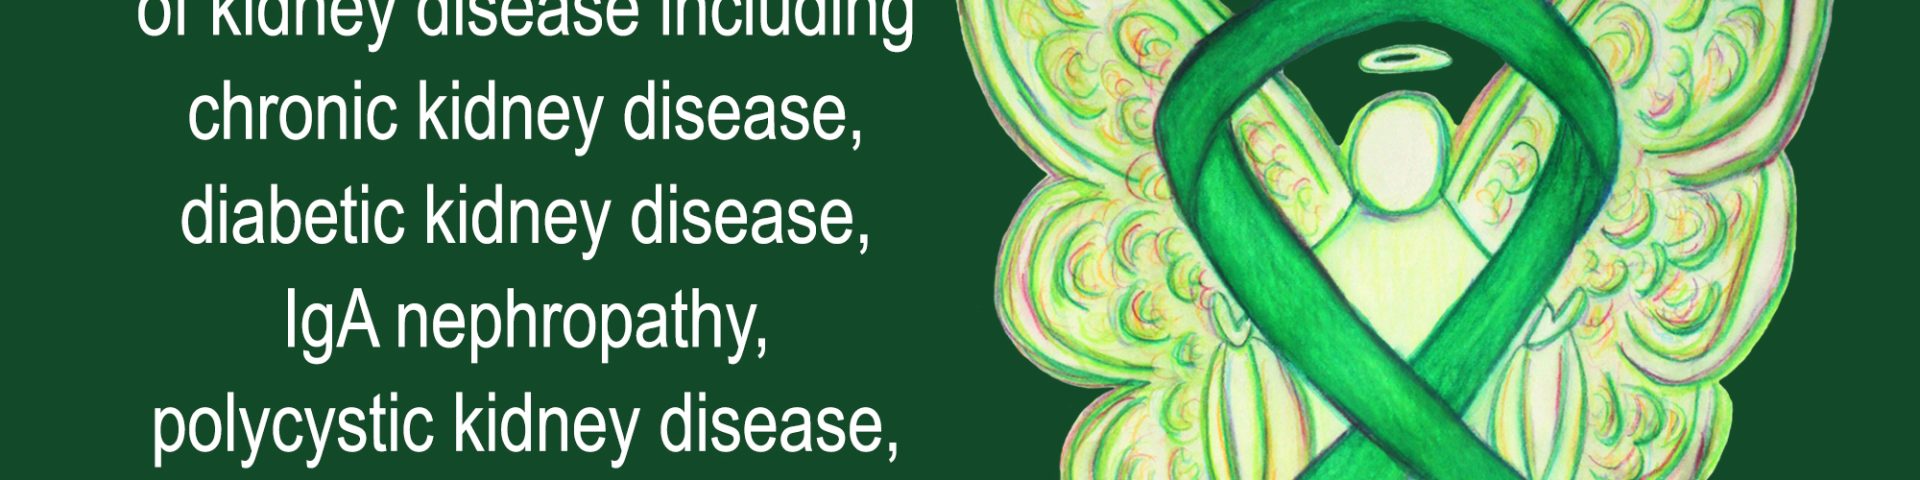 Kidney Disease Awareness Green Ribbon Angel Art Painting